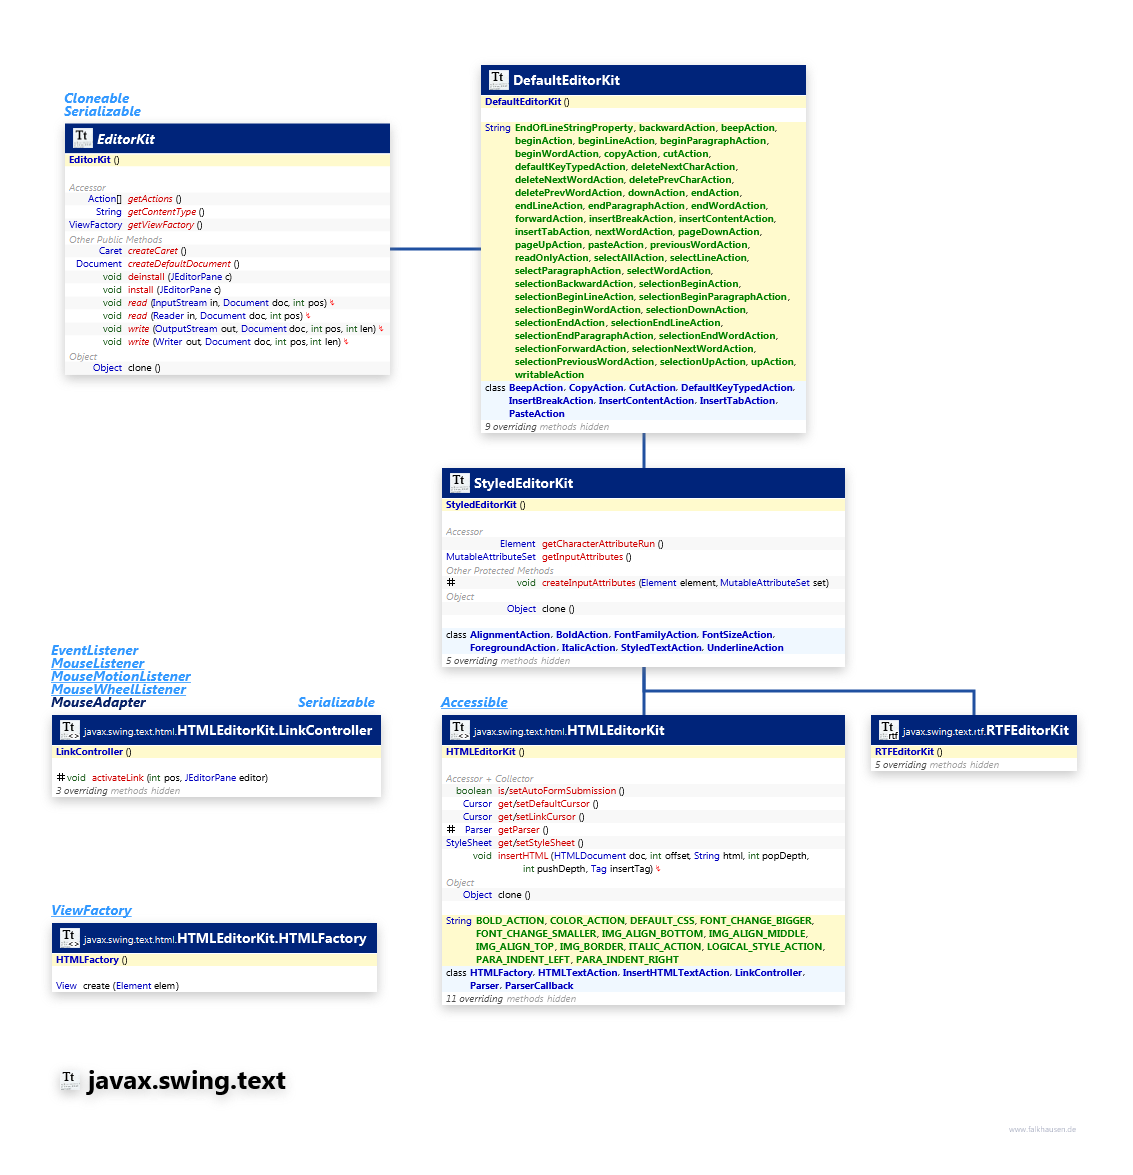 javax.swing.text EditorKit class diagram and api documentation for Java 8